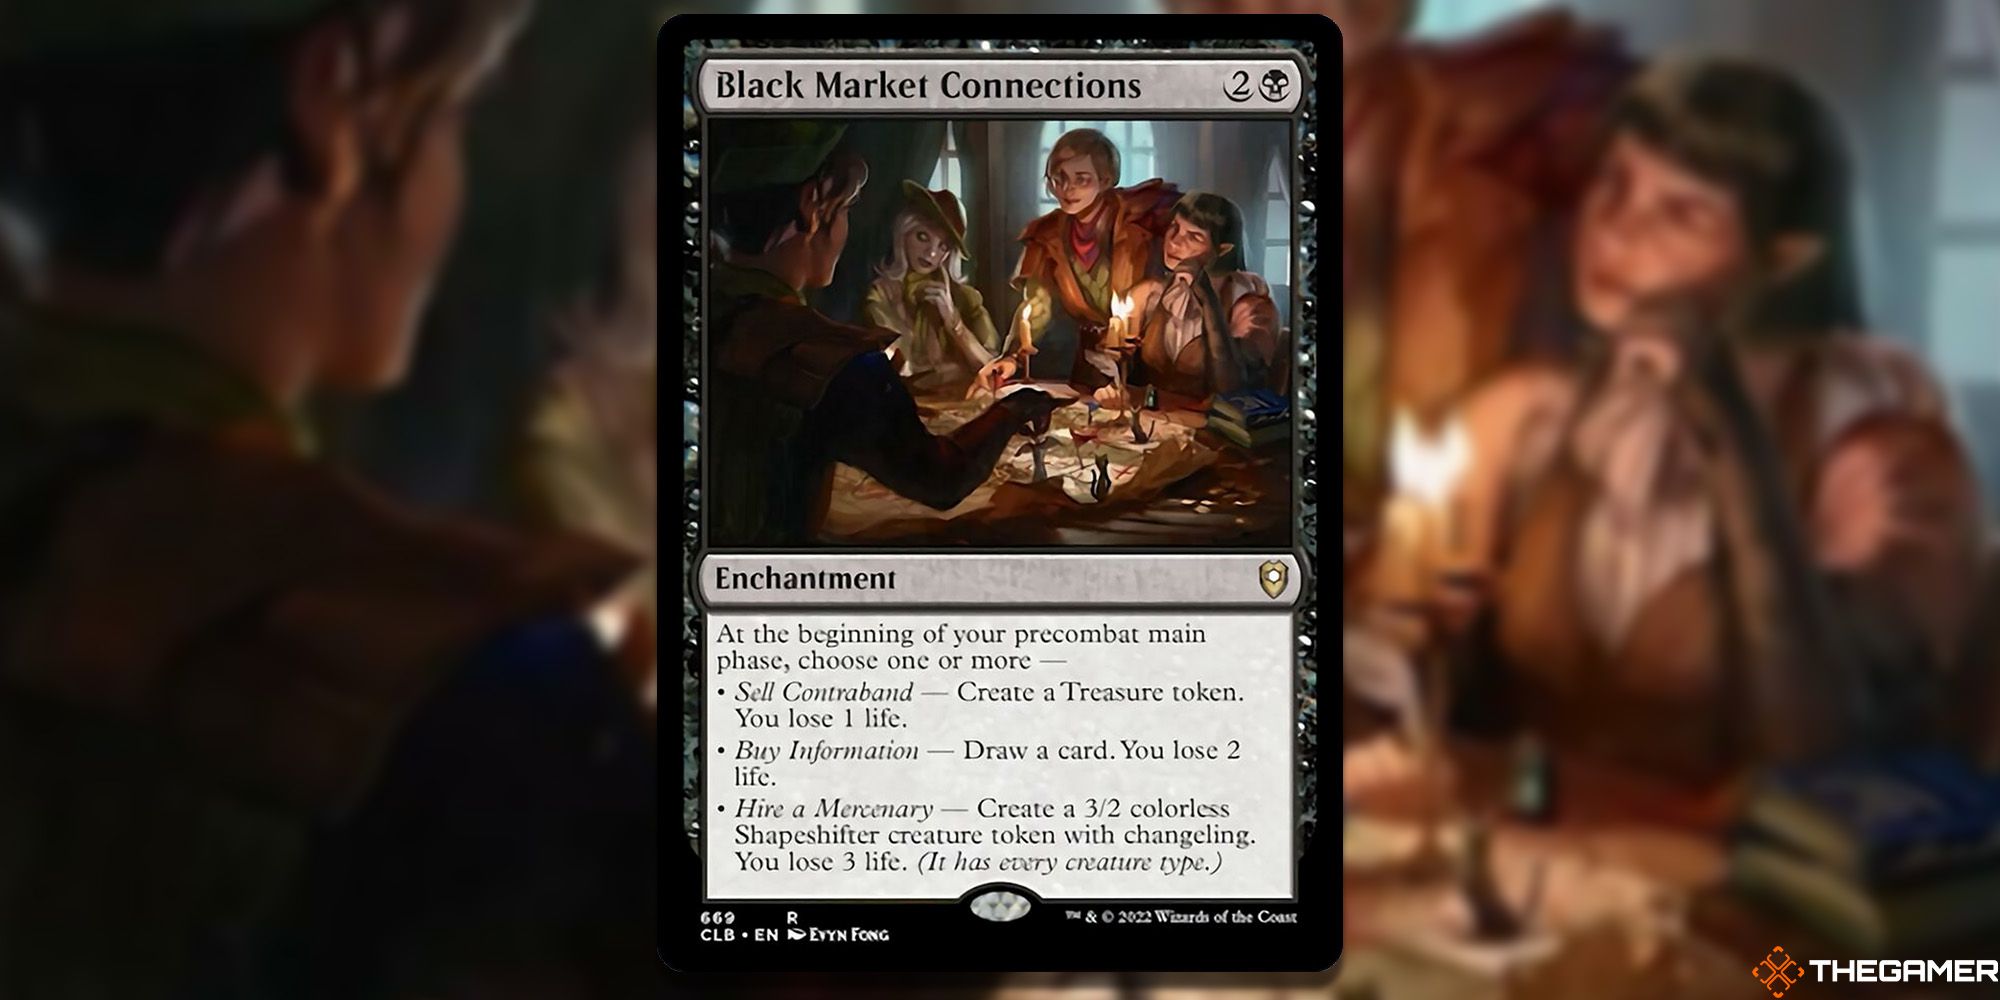 Black Market Connections